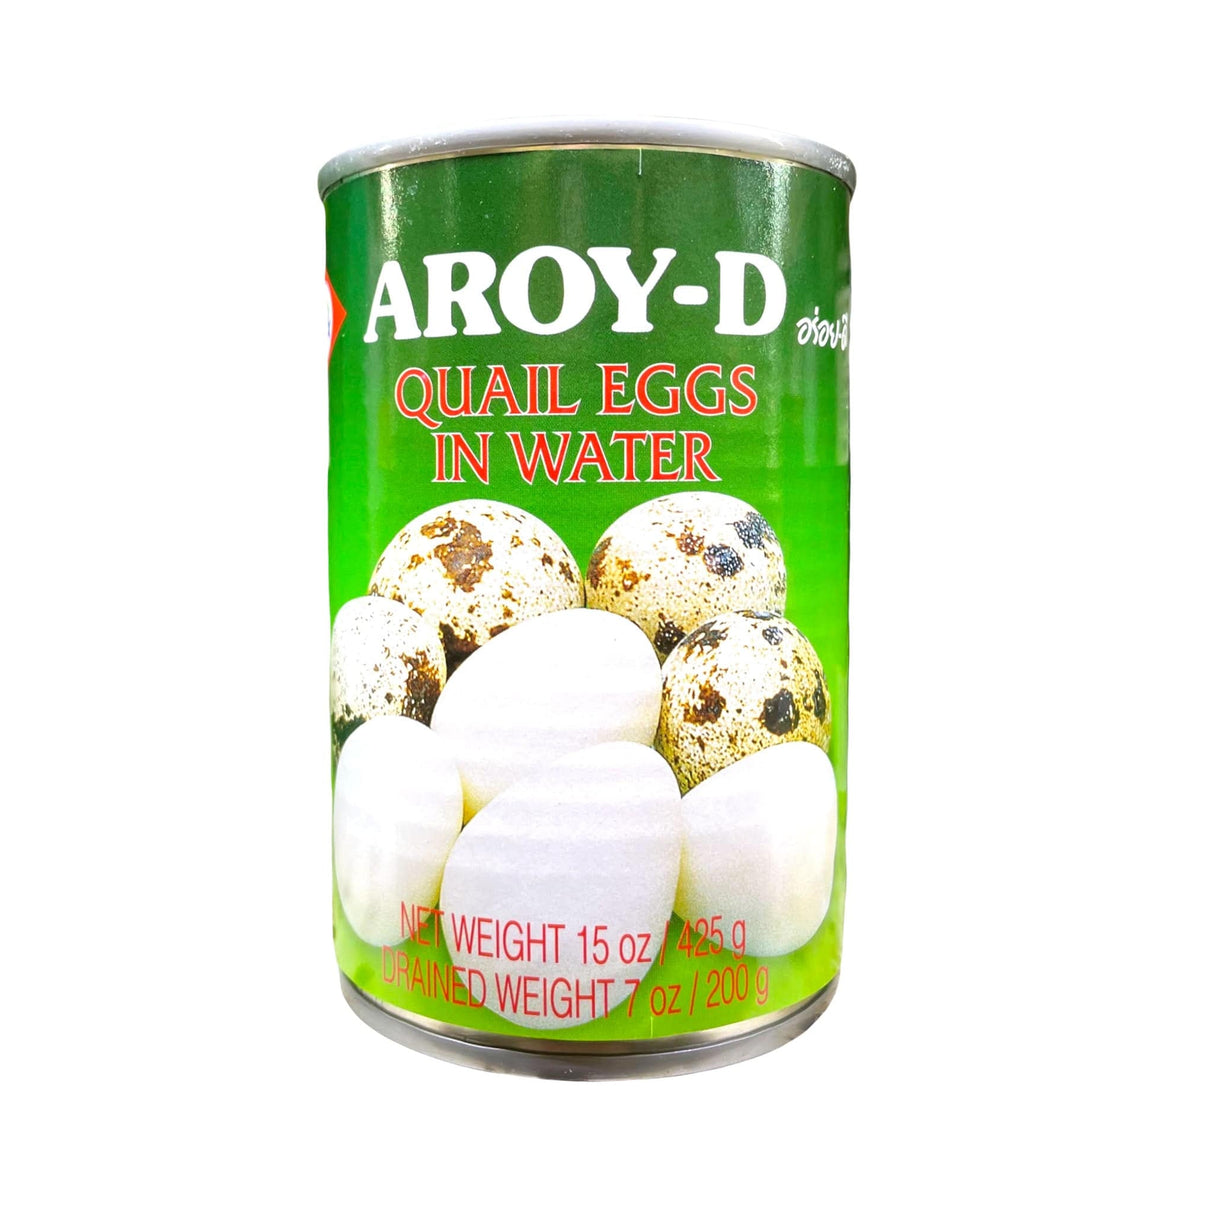 Aroy-d Quail Eggs in Water